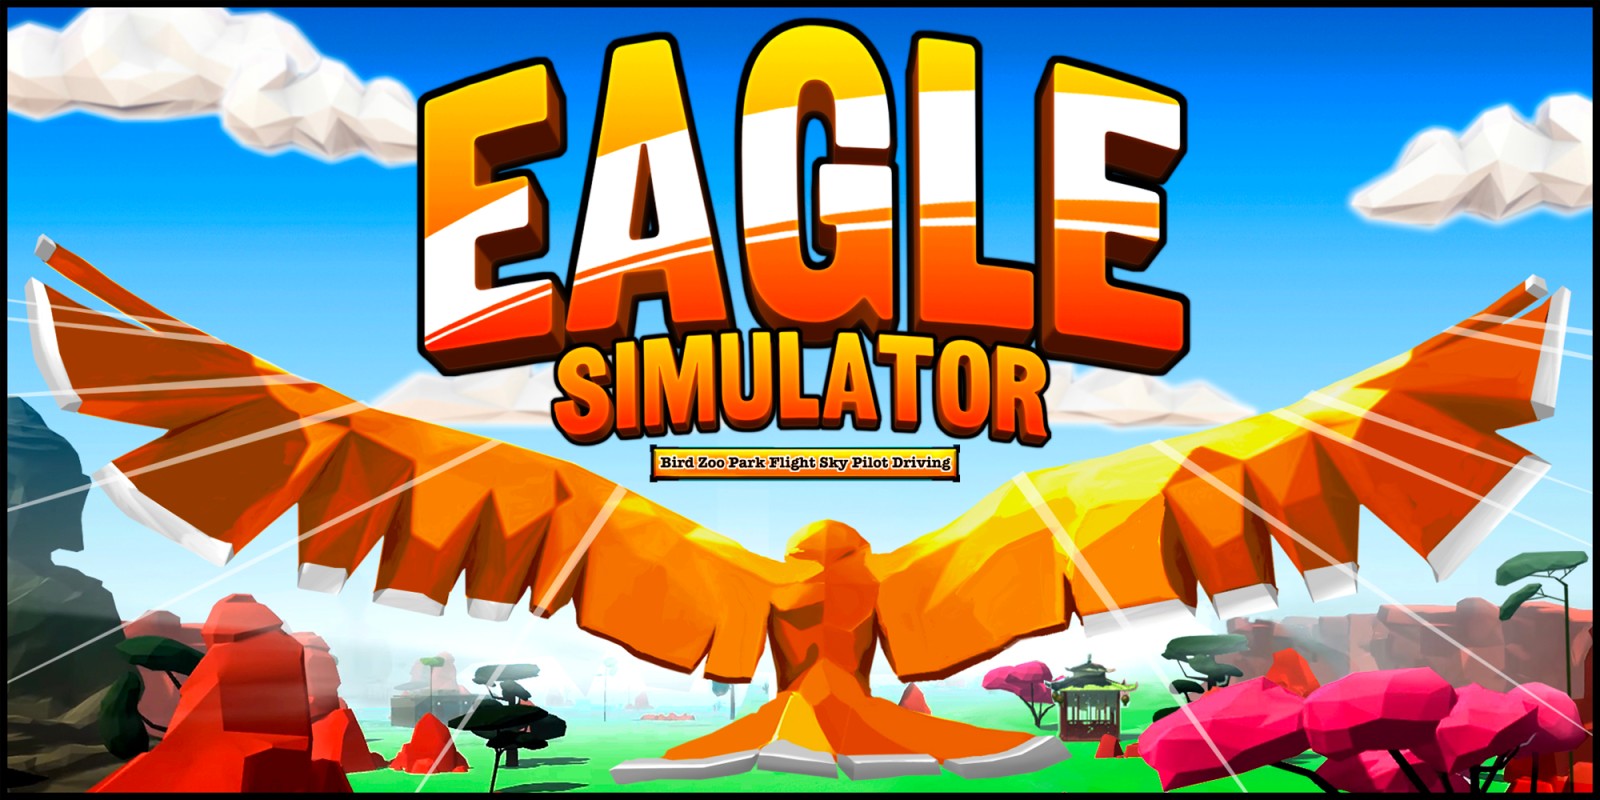 Eagle Simulator - Bird Zoo Park Flight Sky Pilot Driving